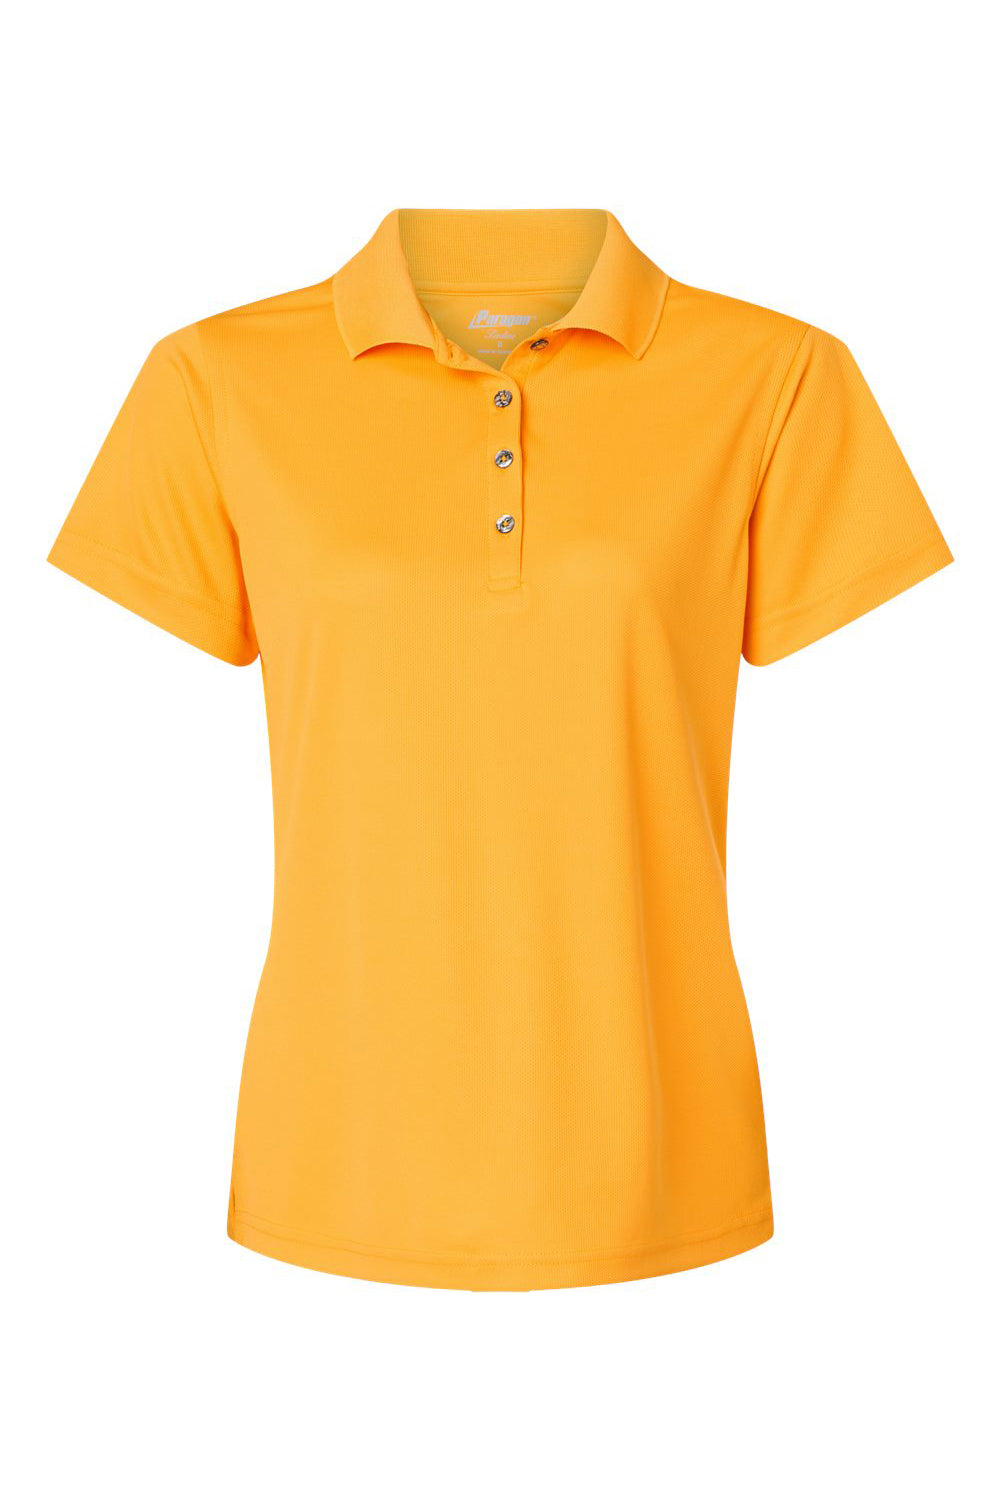 Paragon 104 Womens Saratoga Performance Mini Mesh Short Sleeve Polo Shirt Gold Flat Front